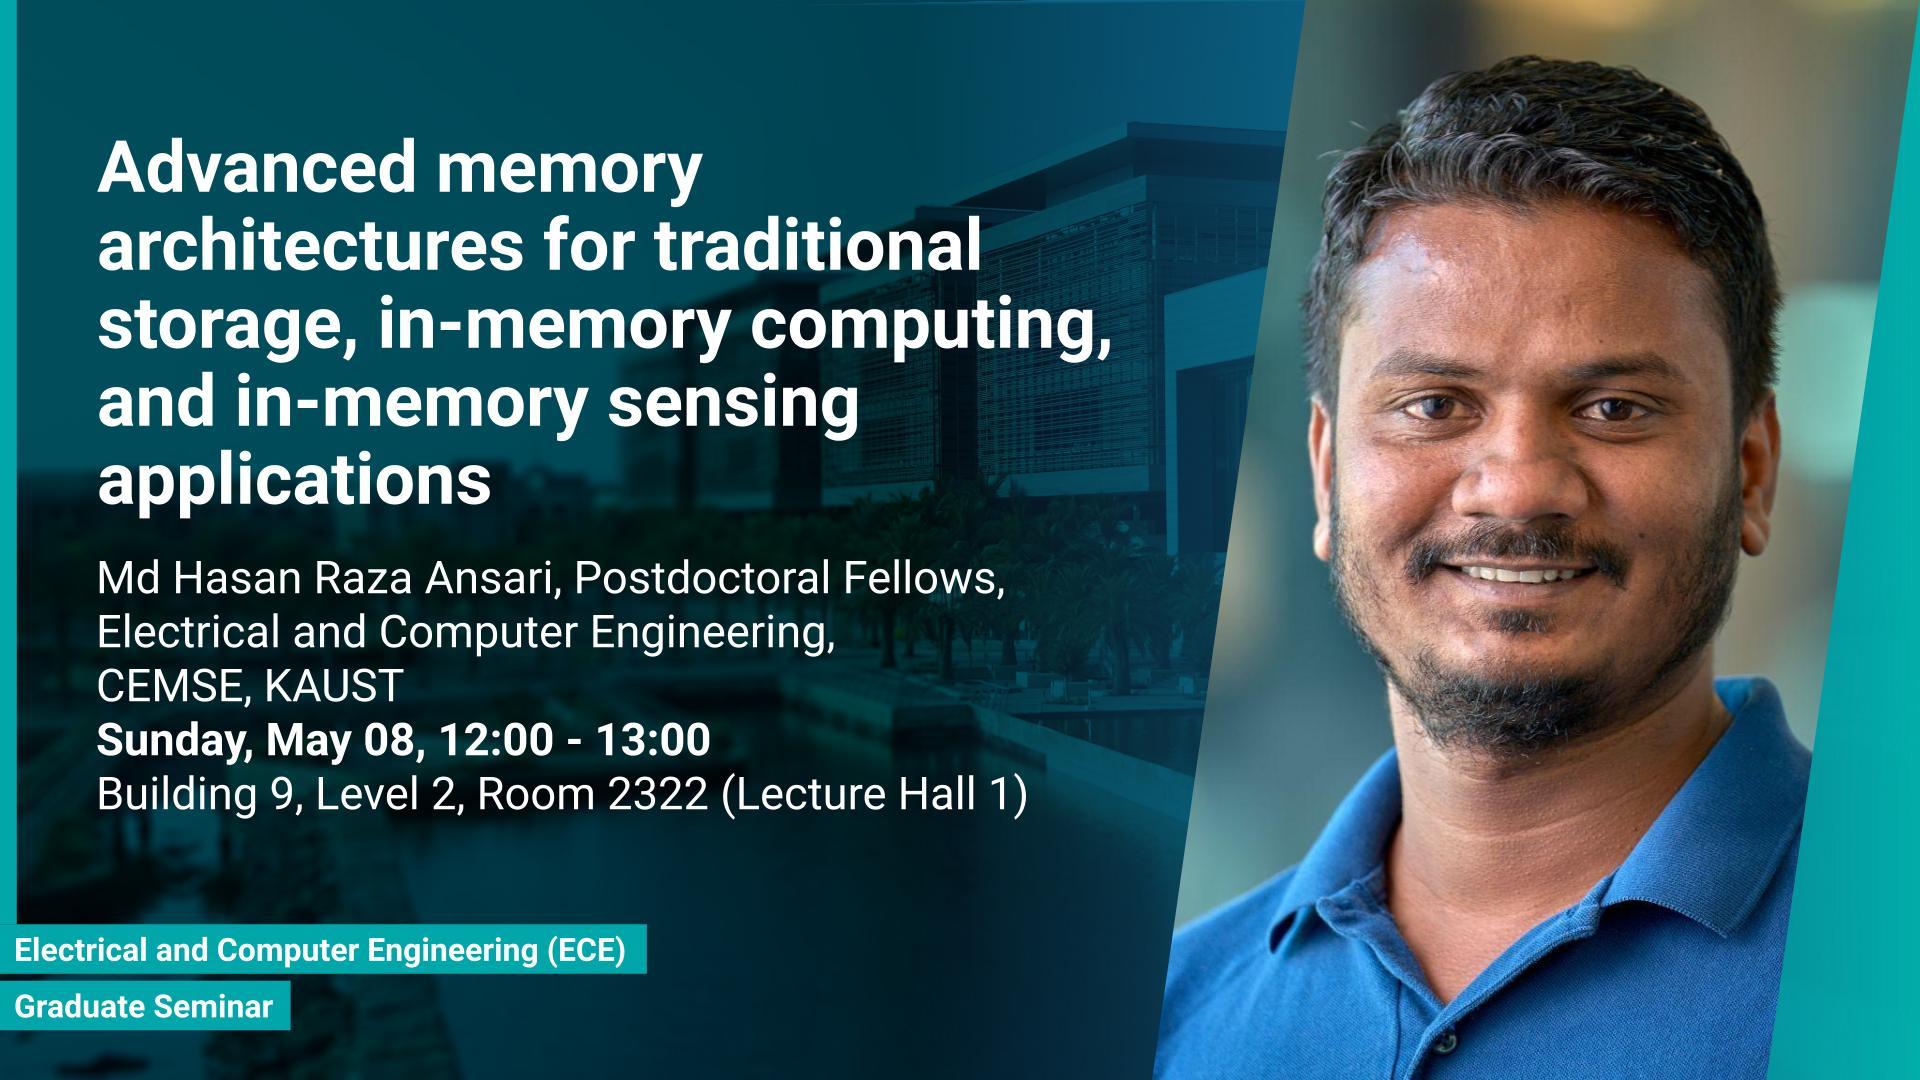 KAUST CEMSE ECE Graduate Seminar Md Hasan Raza Ansari Advanced memory architectures